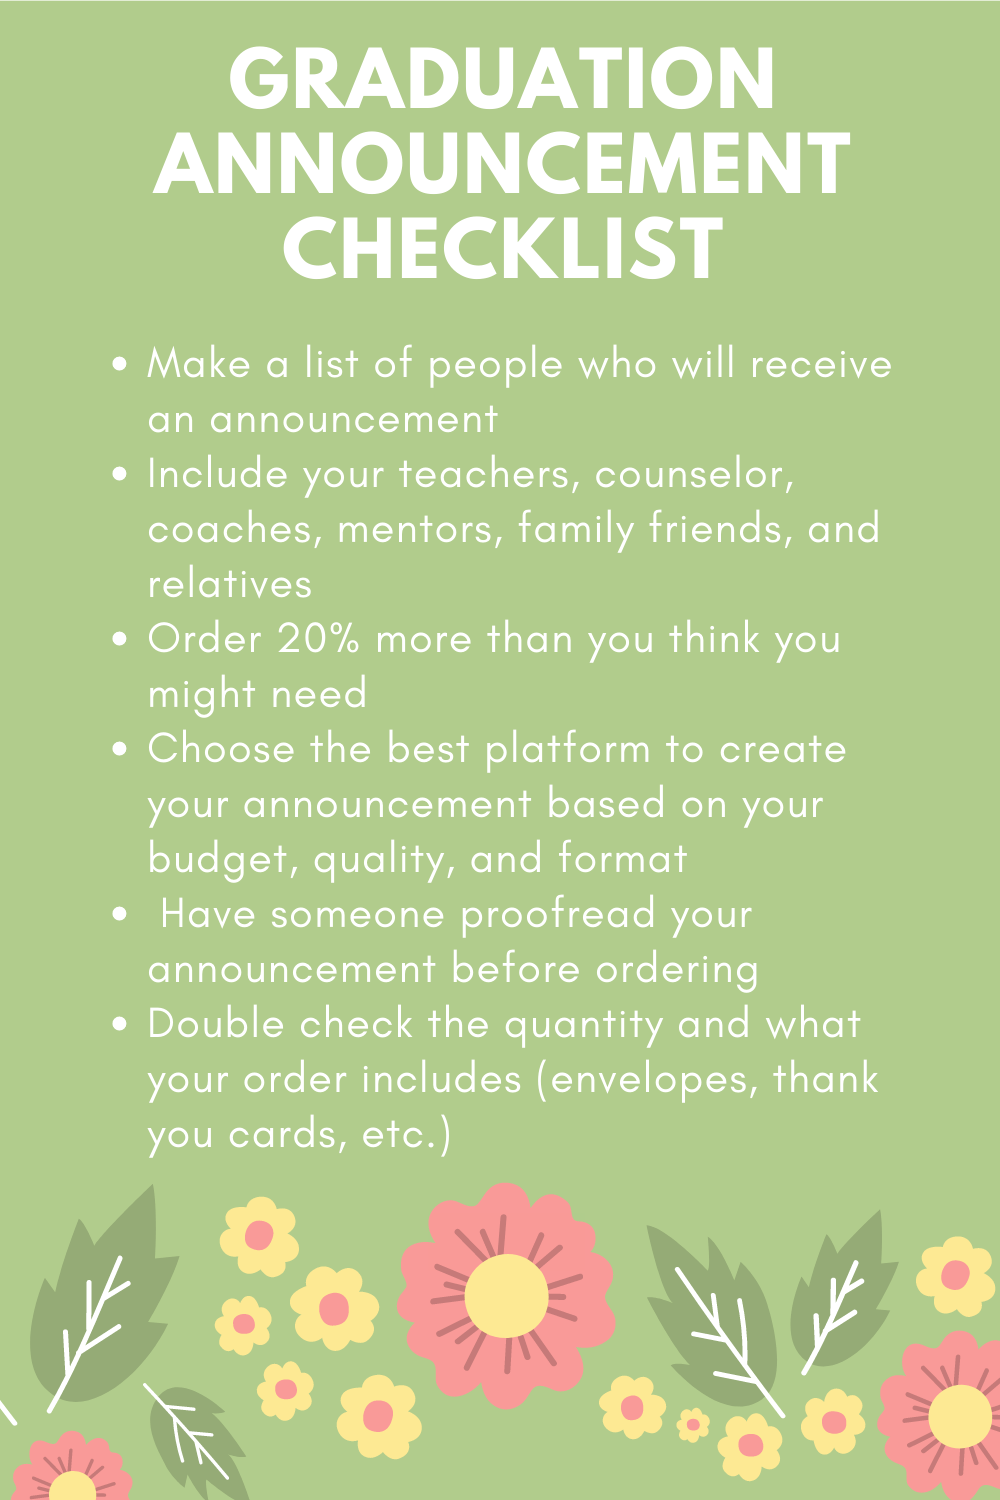 A graduation announcement checklist